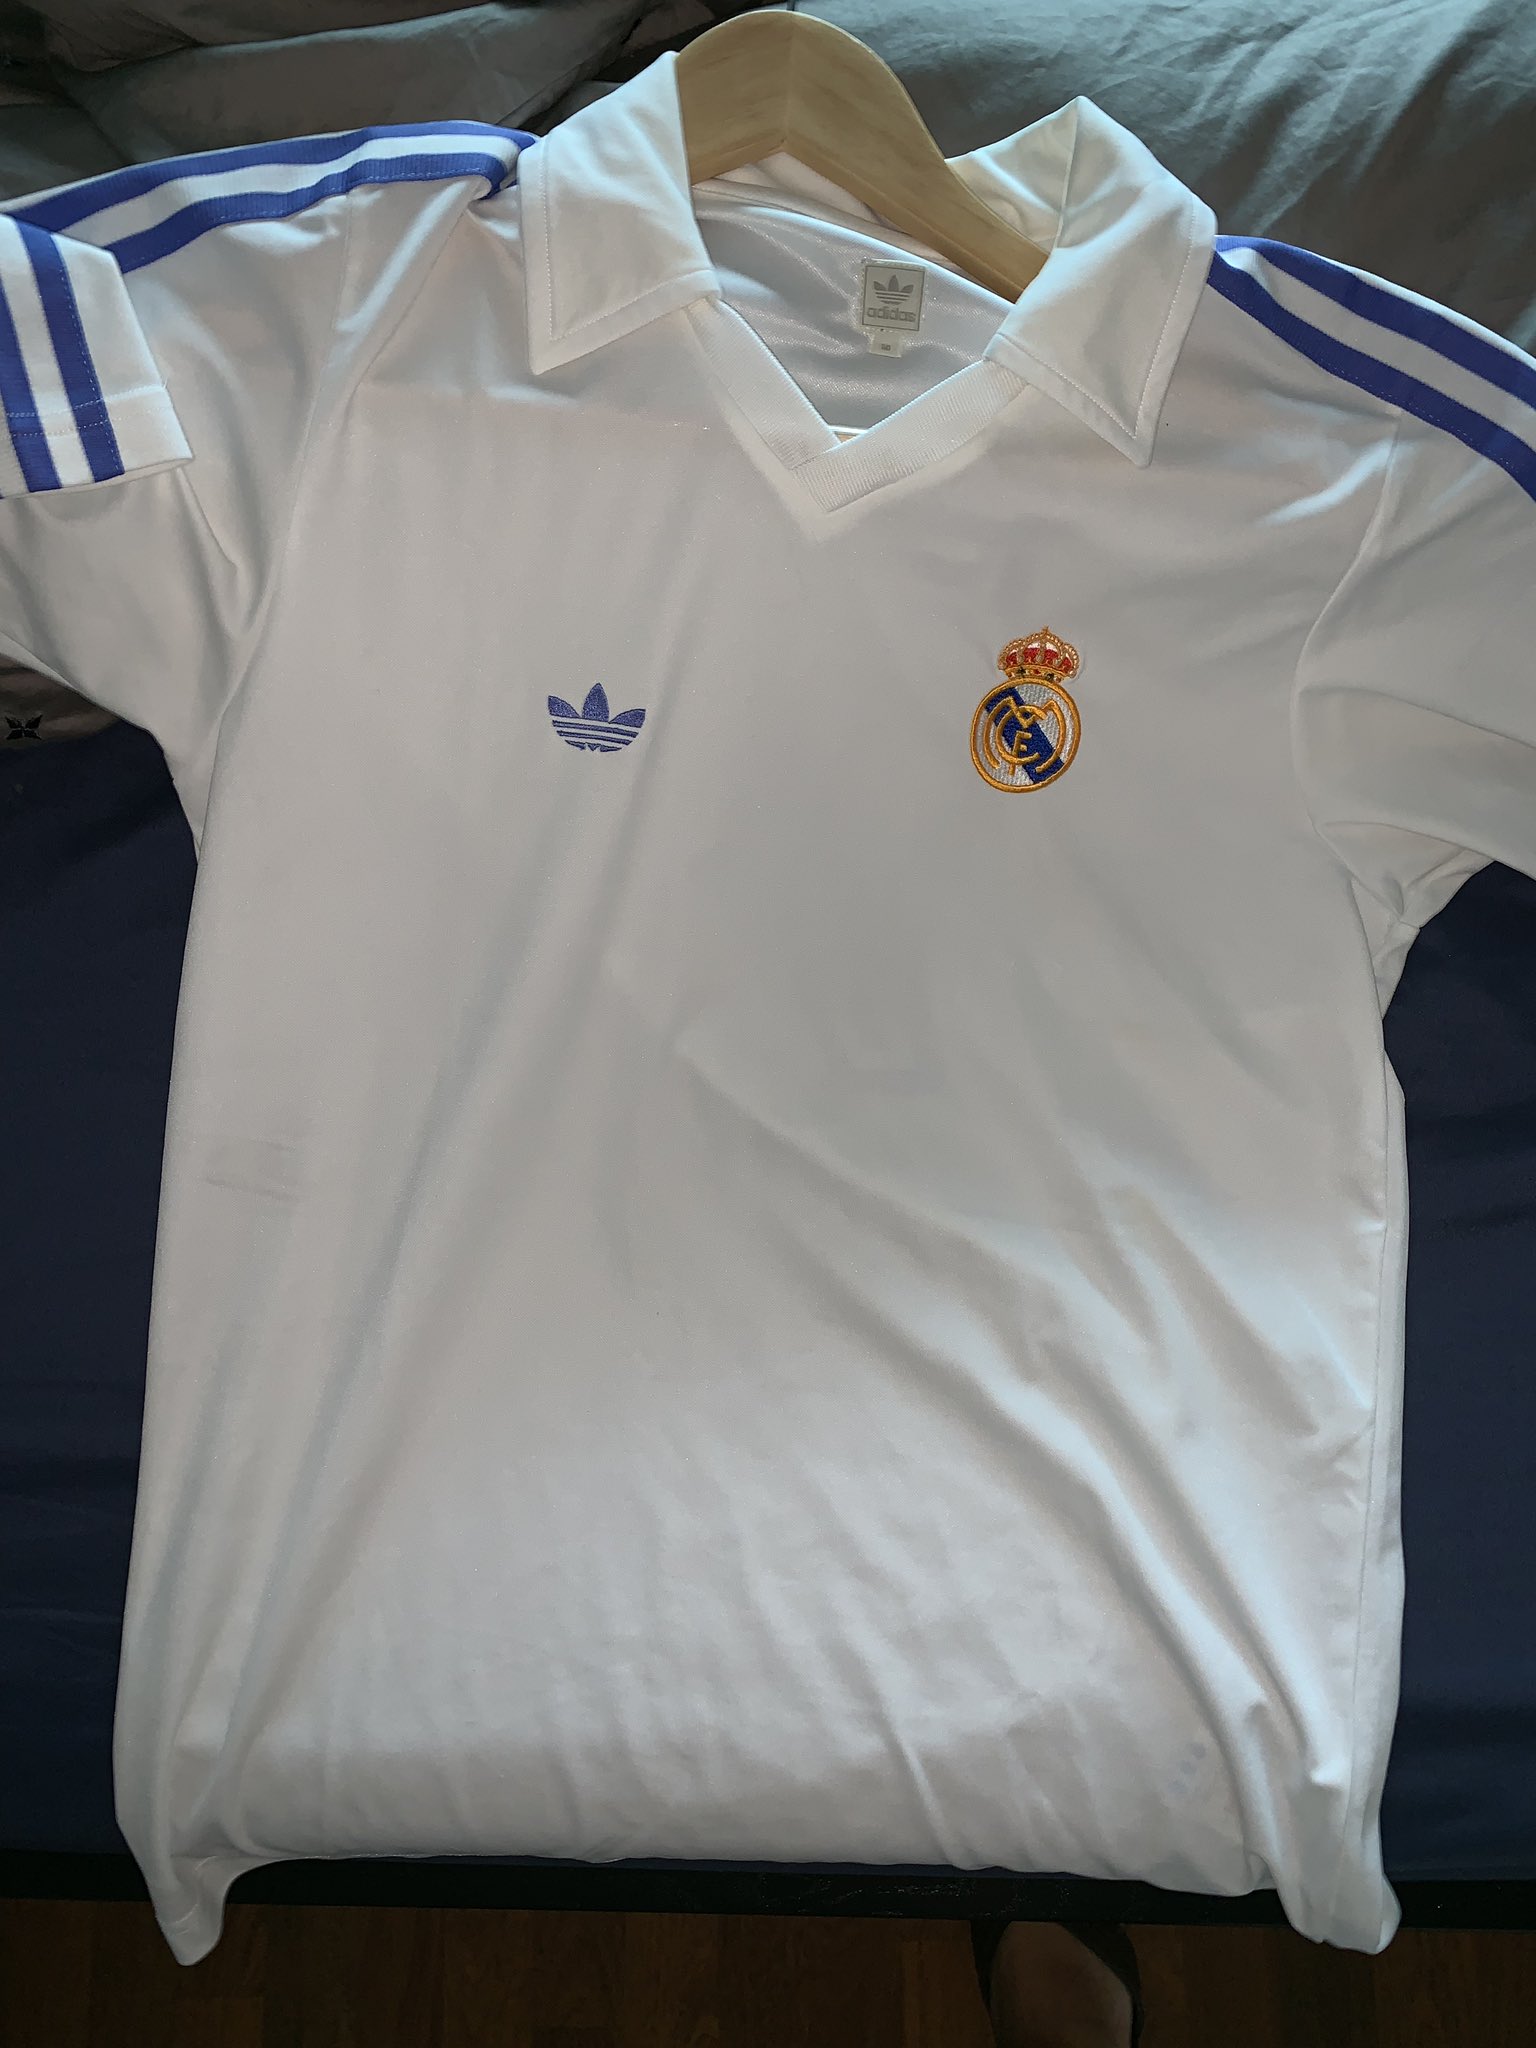 Rancoma on Twitter: "Adidas sacó a la venta en esta camiseta retro del Real Madrid. Era casi idéntica a la de la época de Zanussi en el detalle de que